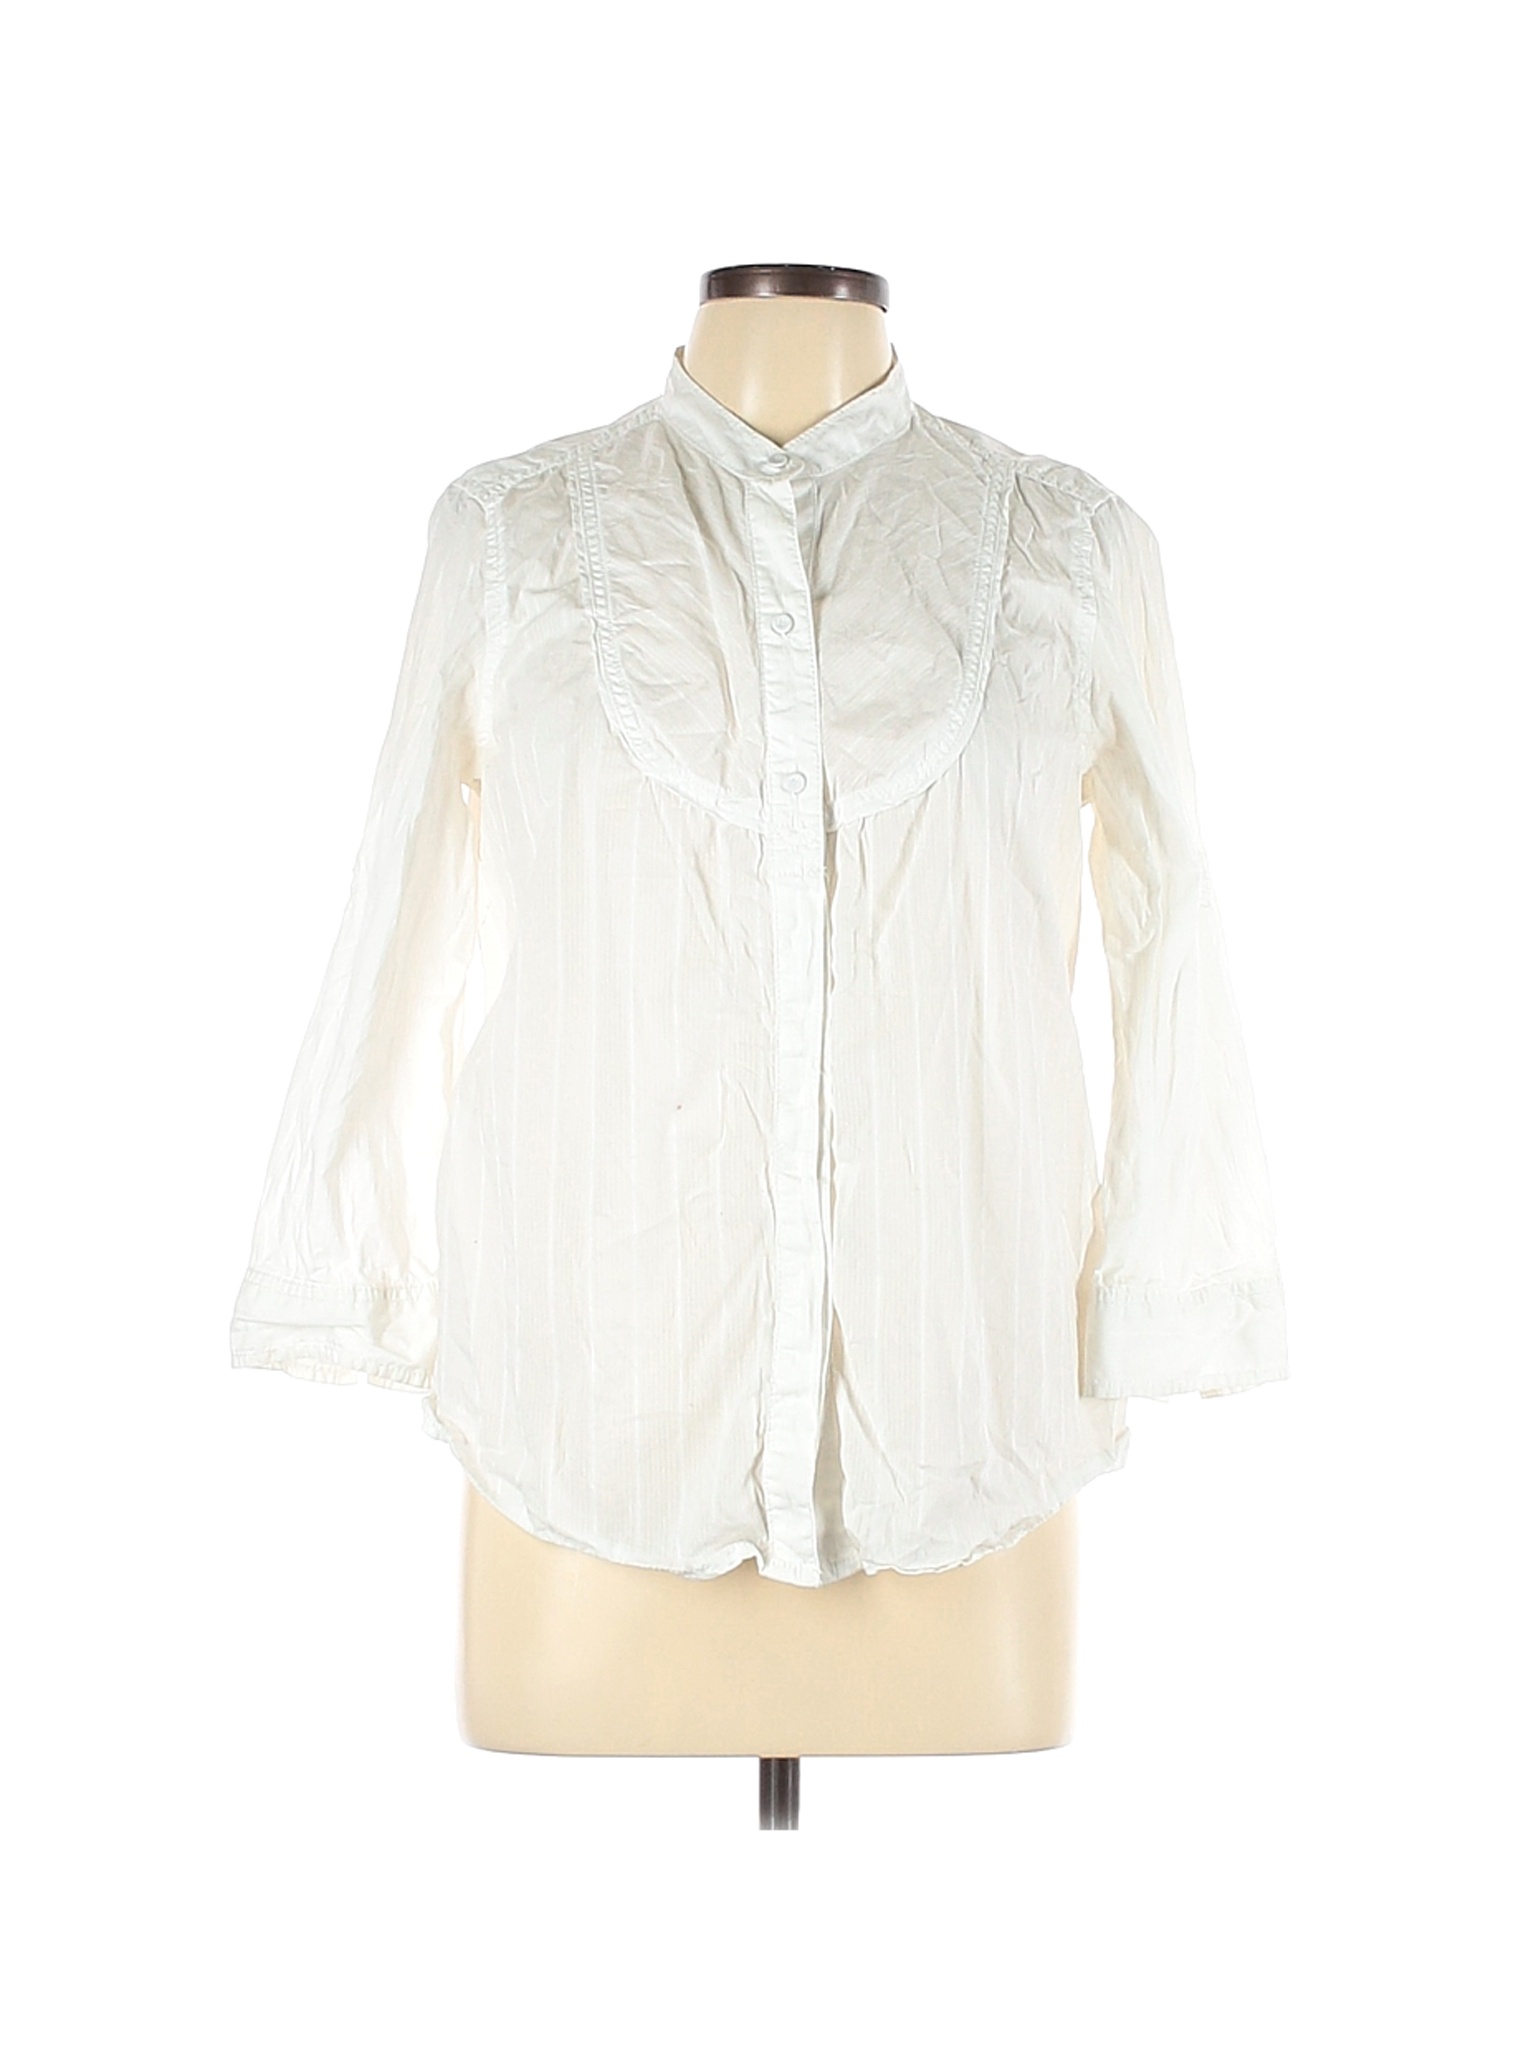 Liz Claiborne Women White 3/4 Sleeve Button-Down Shirt L | eBay